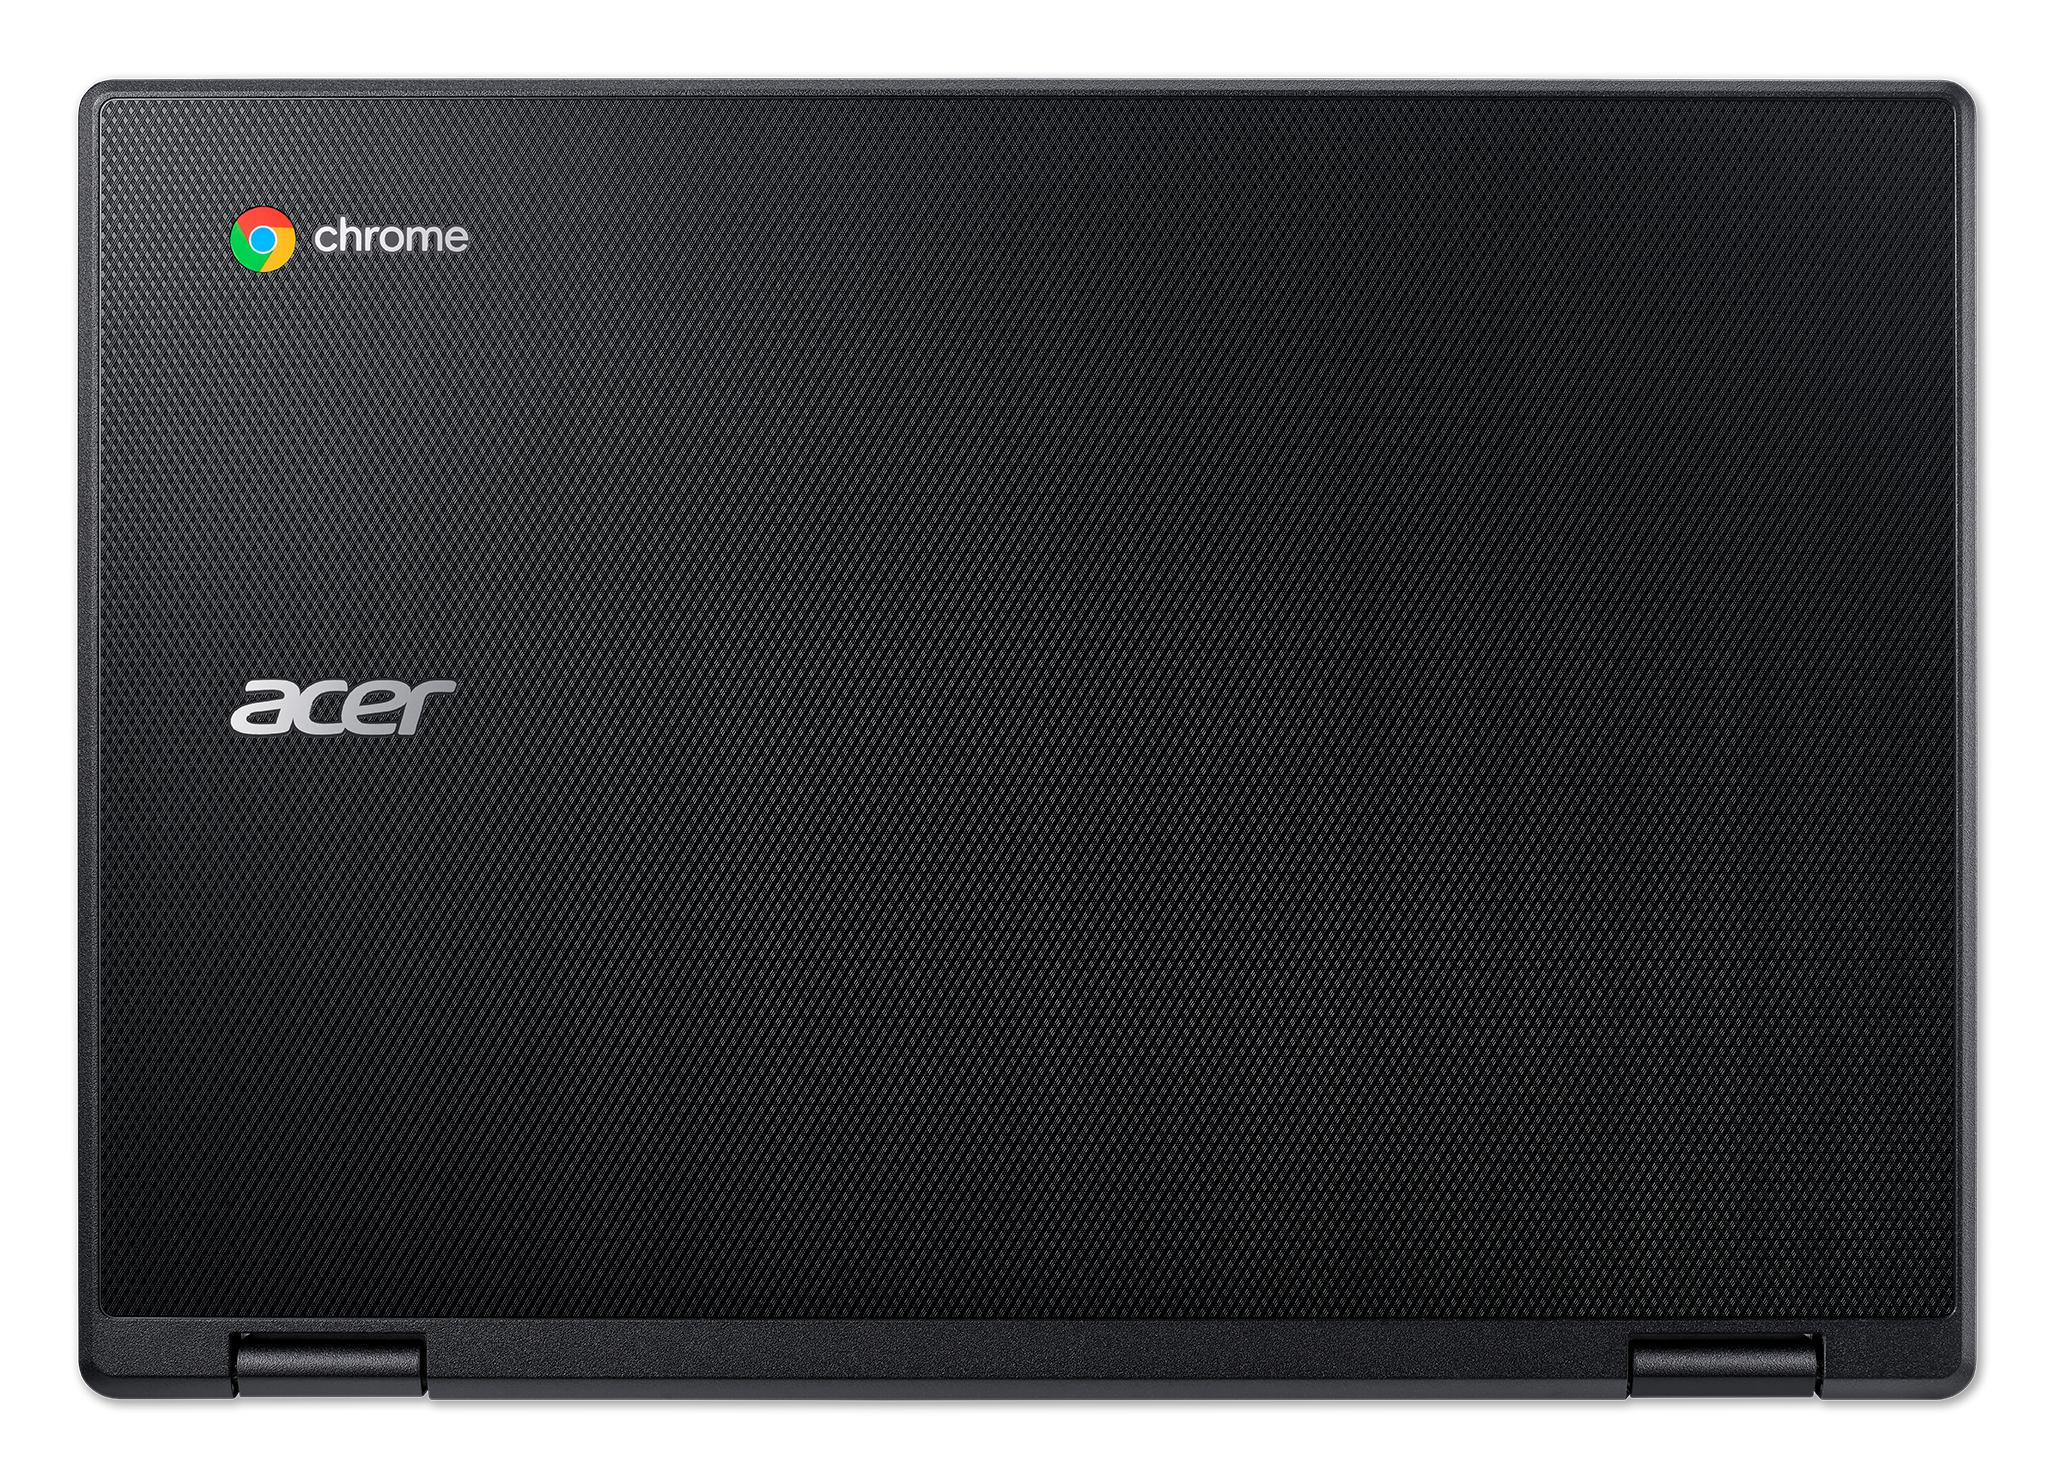 Acer Chromebook 311 CB311-10H-41M9, Military Standard (MIL-STD 810G) impact-resistant body; AMD A-Series Dual-Core A4-9120C, 11.6" HD, 4GB DDR4, 64GB eMMC, 802.11ac WiFi 5, Bluetooth 4.2, Chrome OS - image 4 of 5